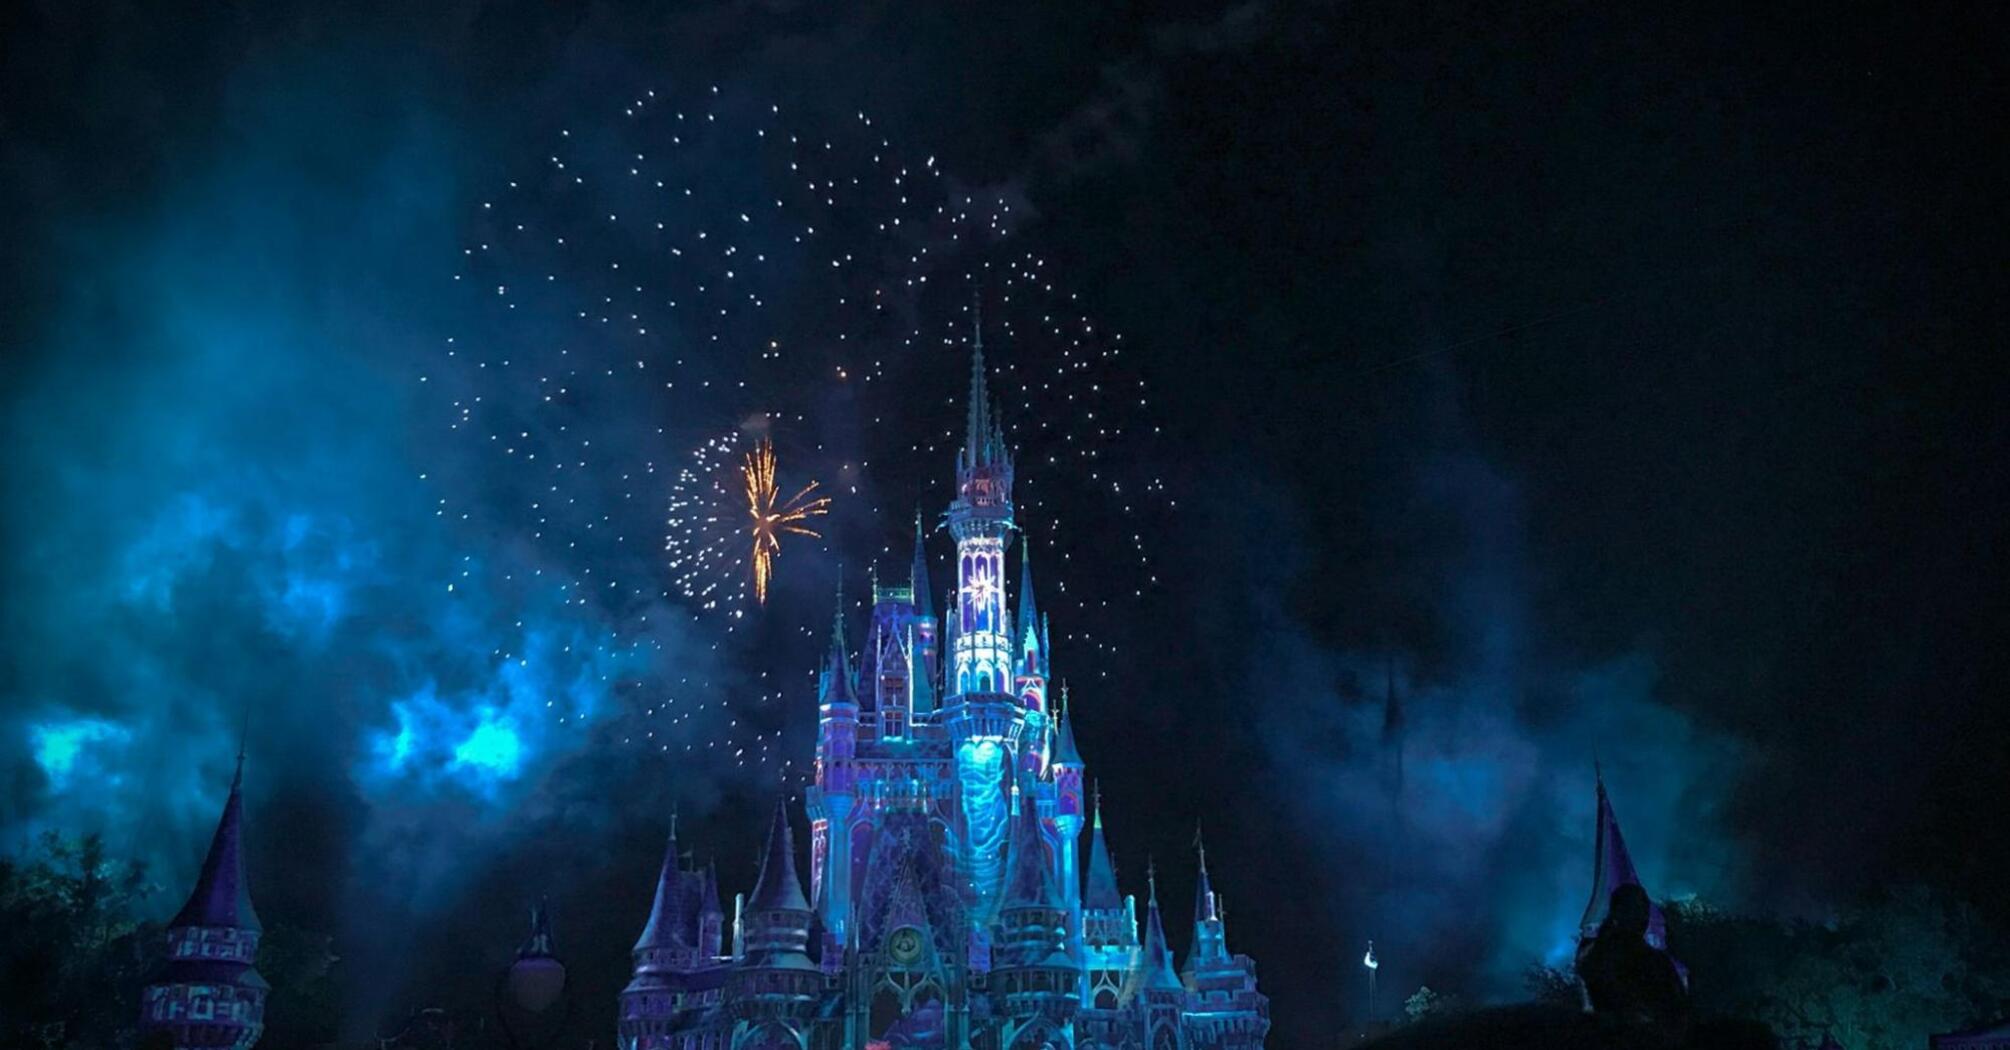 Disney castle in beautiful blue colors